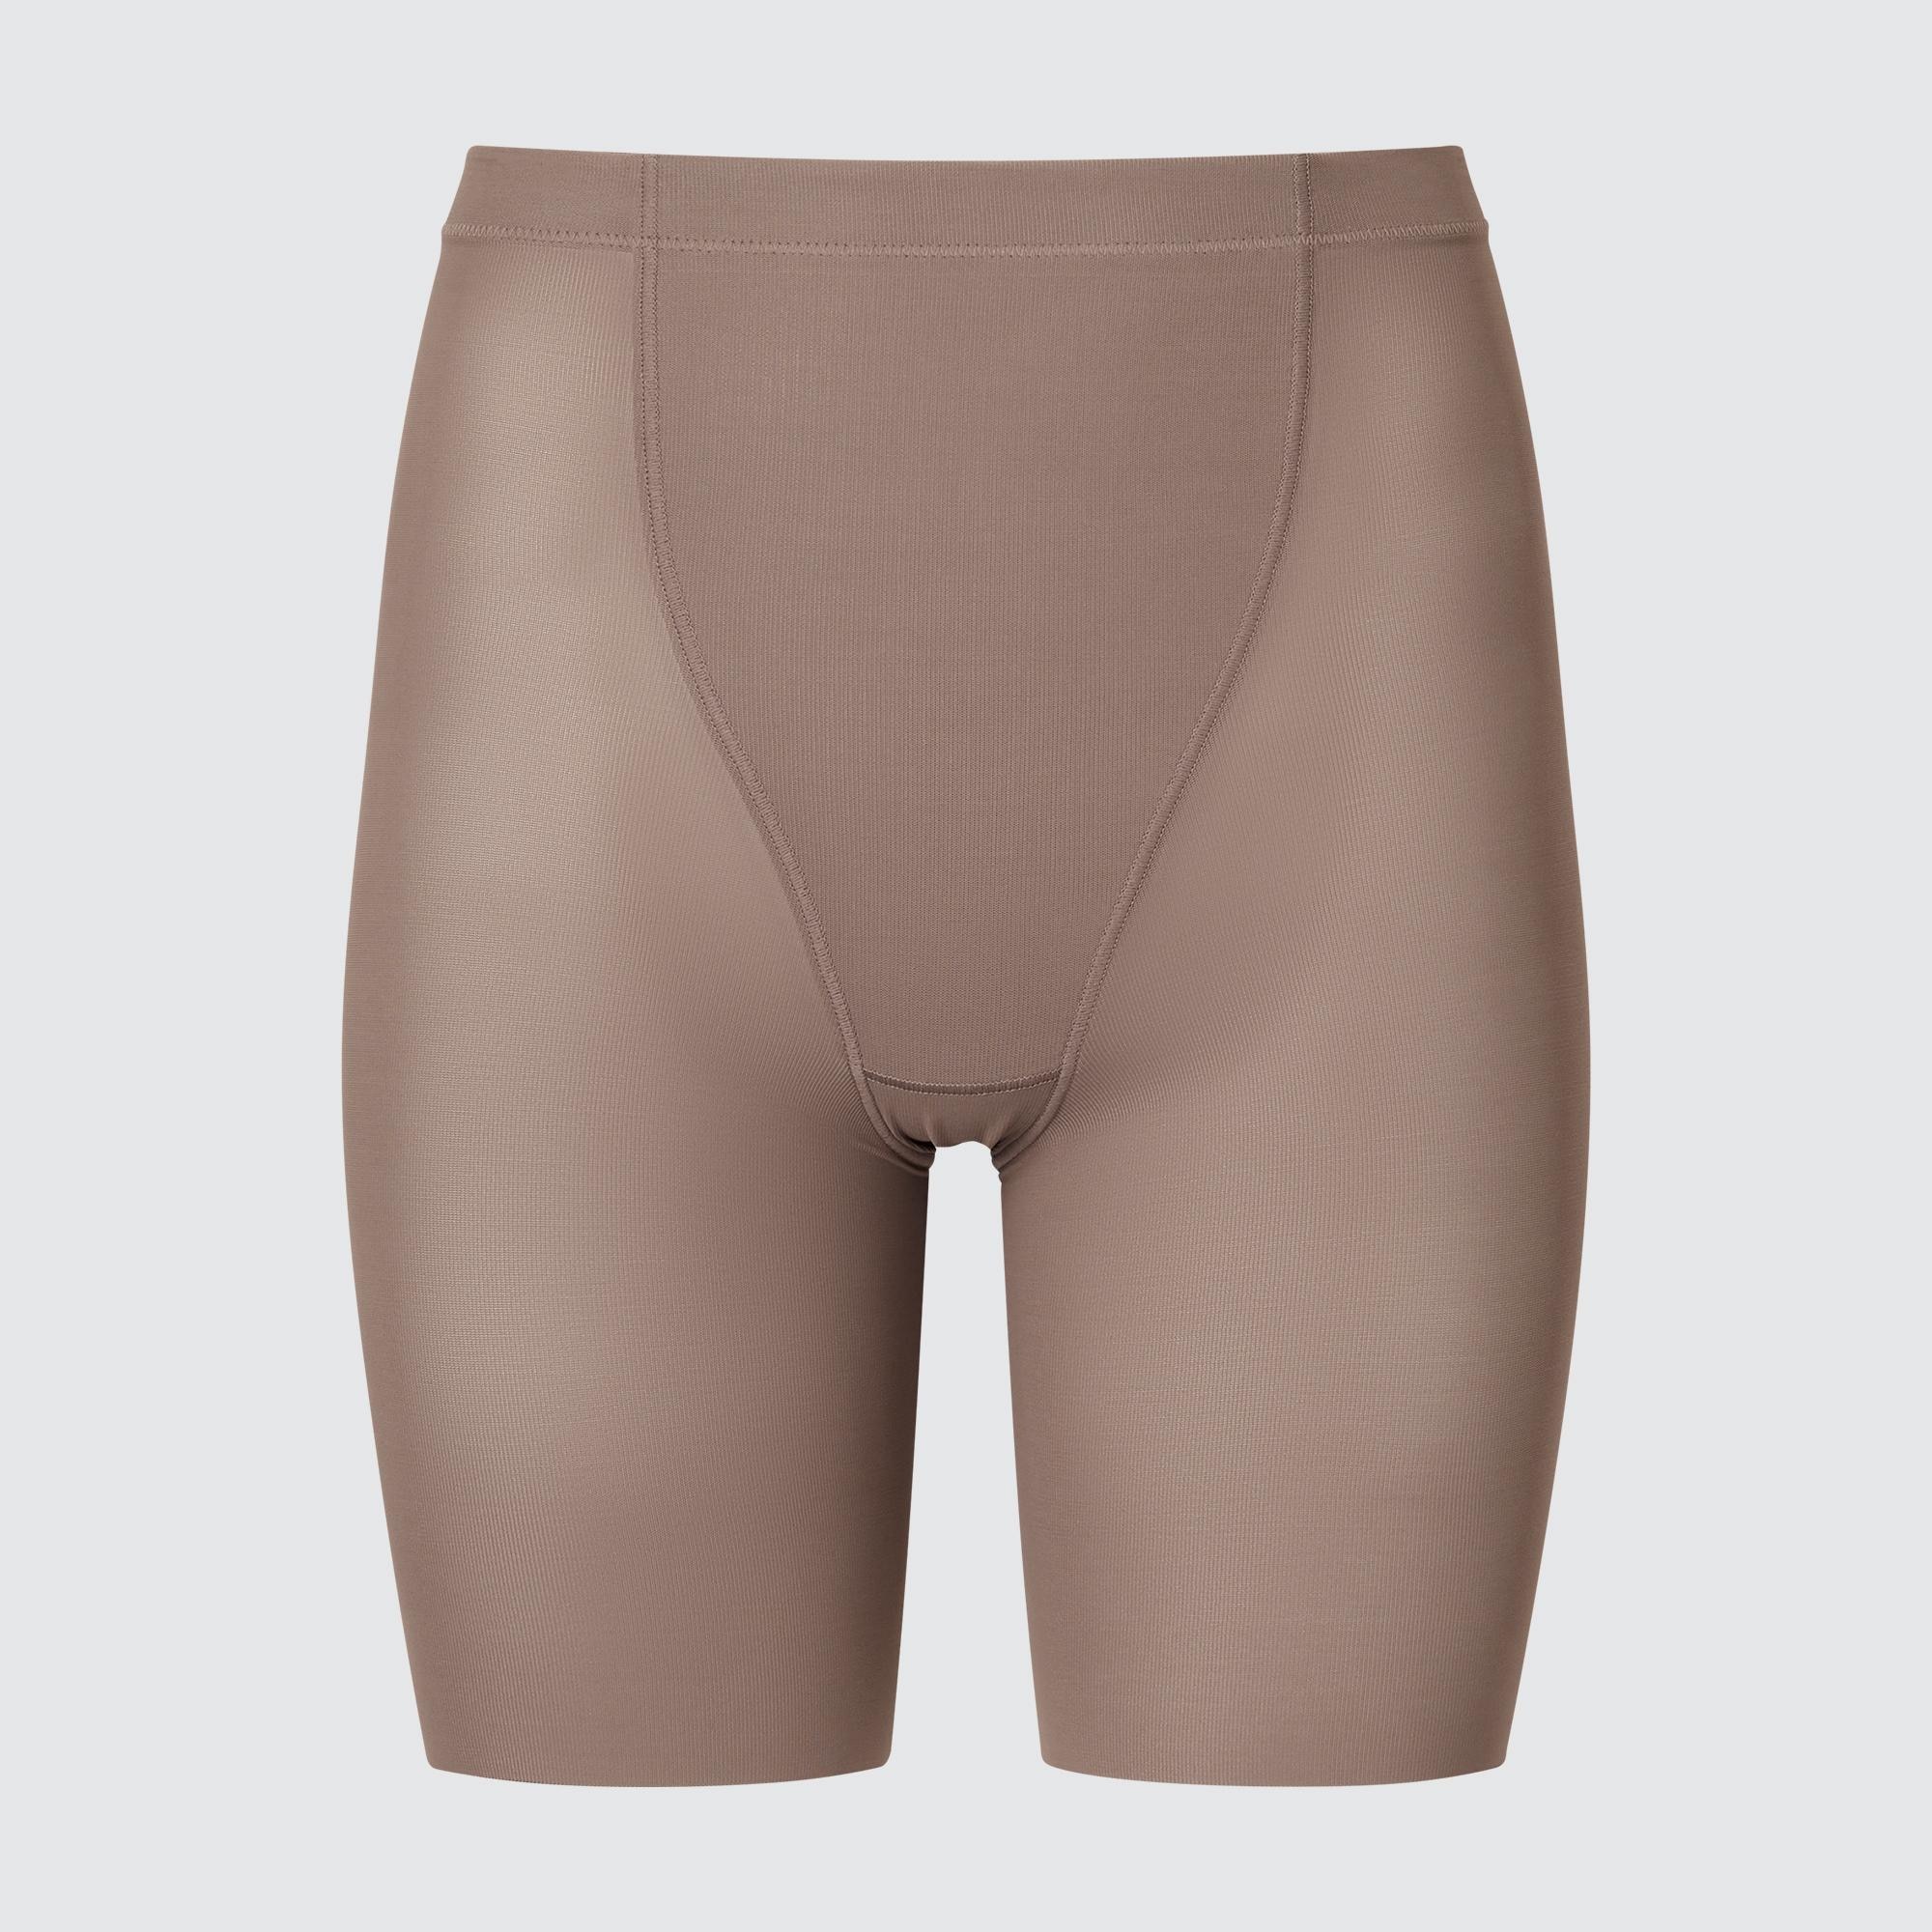 #IDoTrades UNIQLO Body Shaper Shorts / Pants / girdle